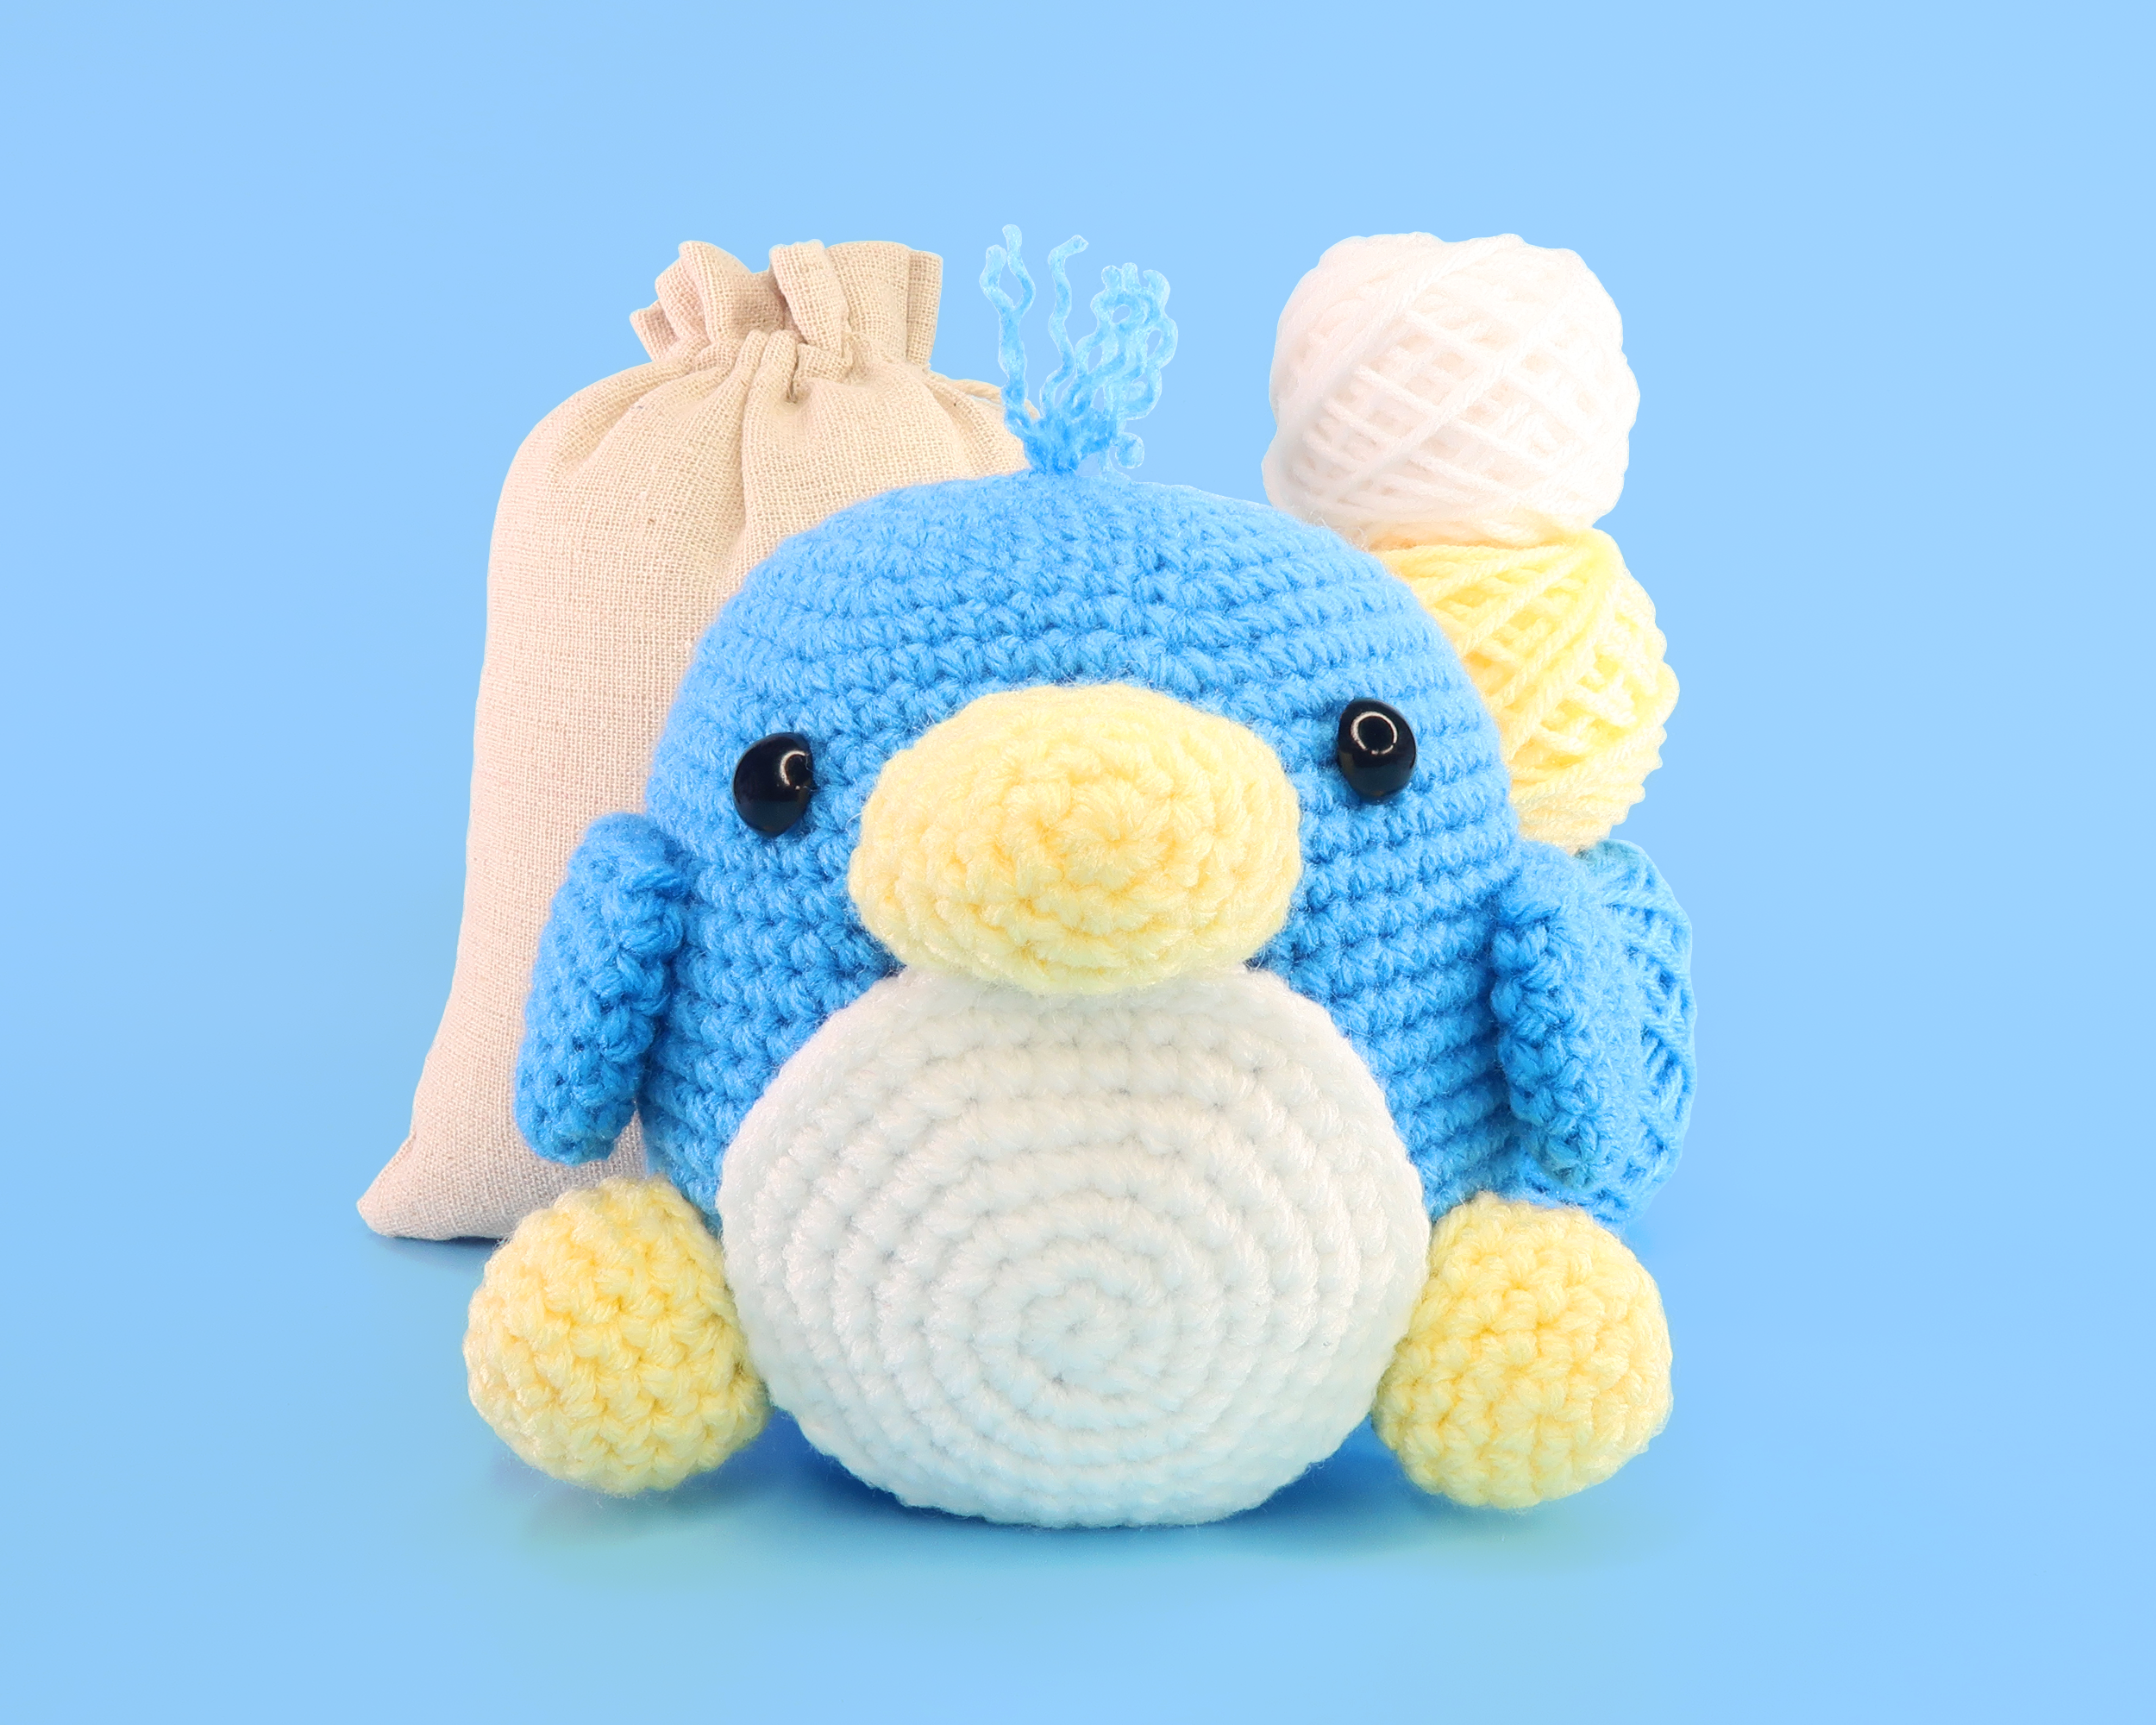 KIT CROCHET GRAND AMIGURUMI LICORNE Kits Crochet • Pingouin • Happywool